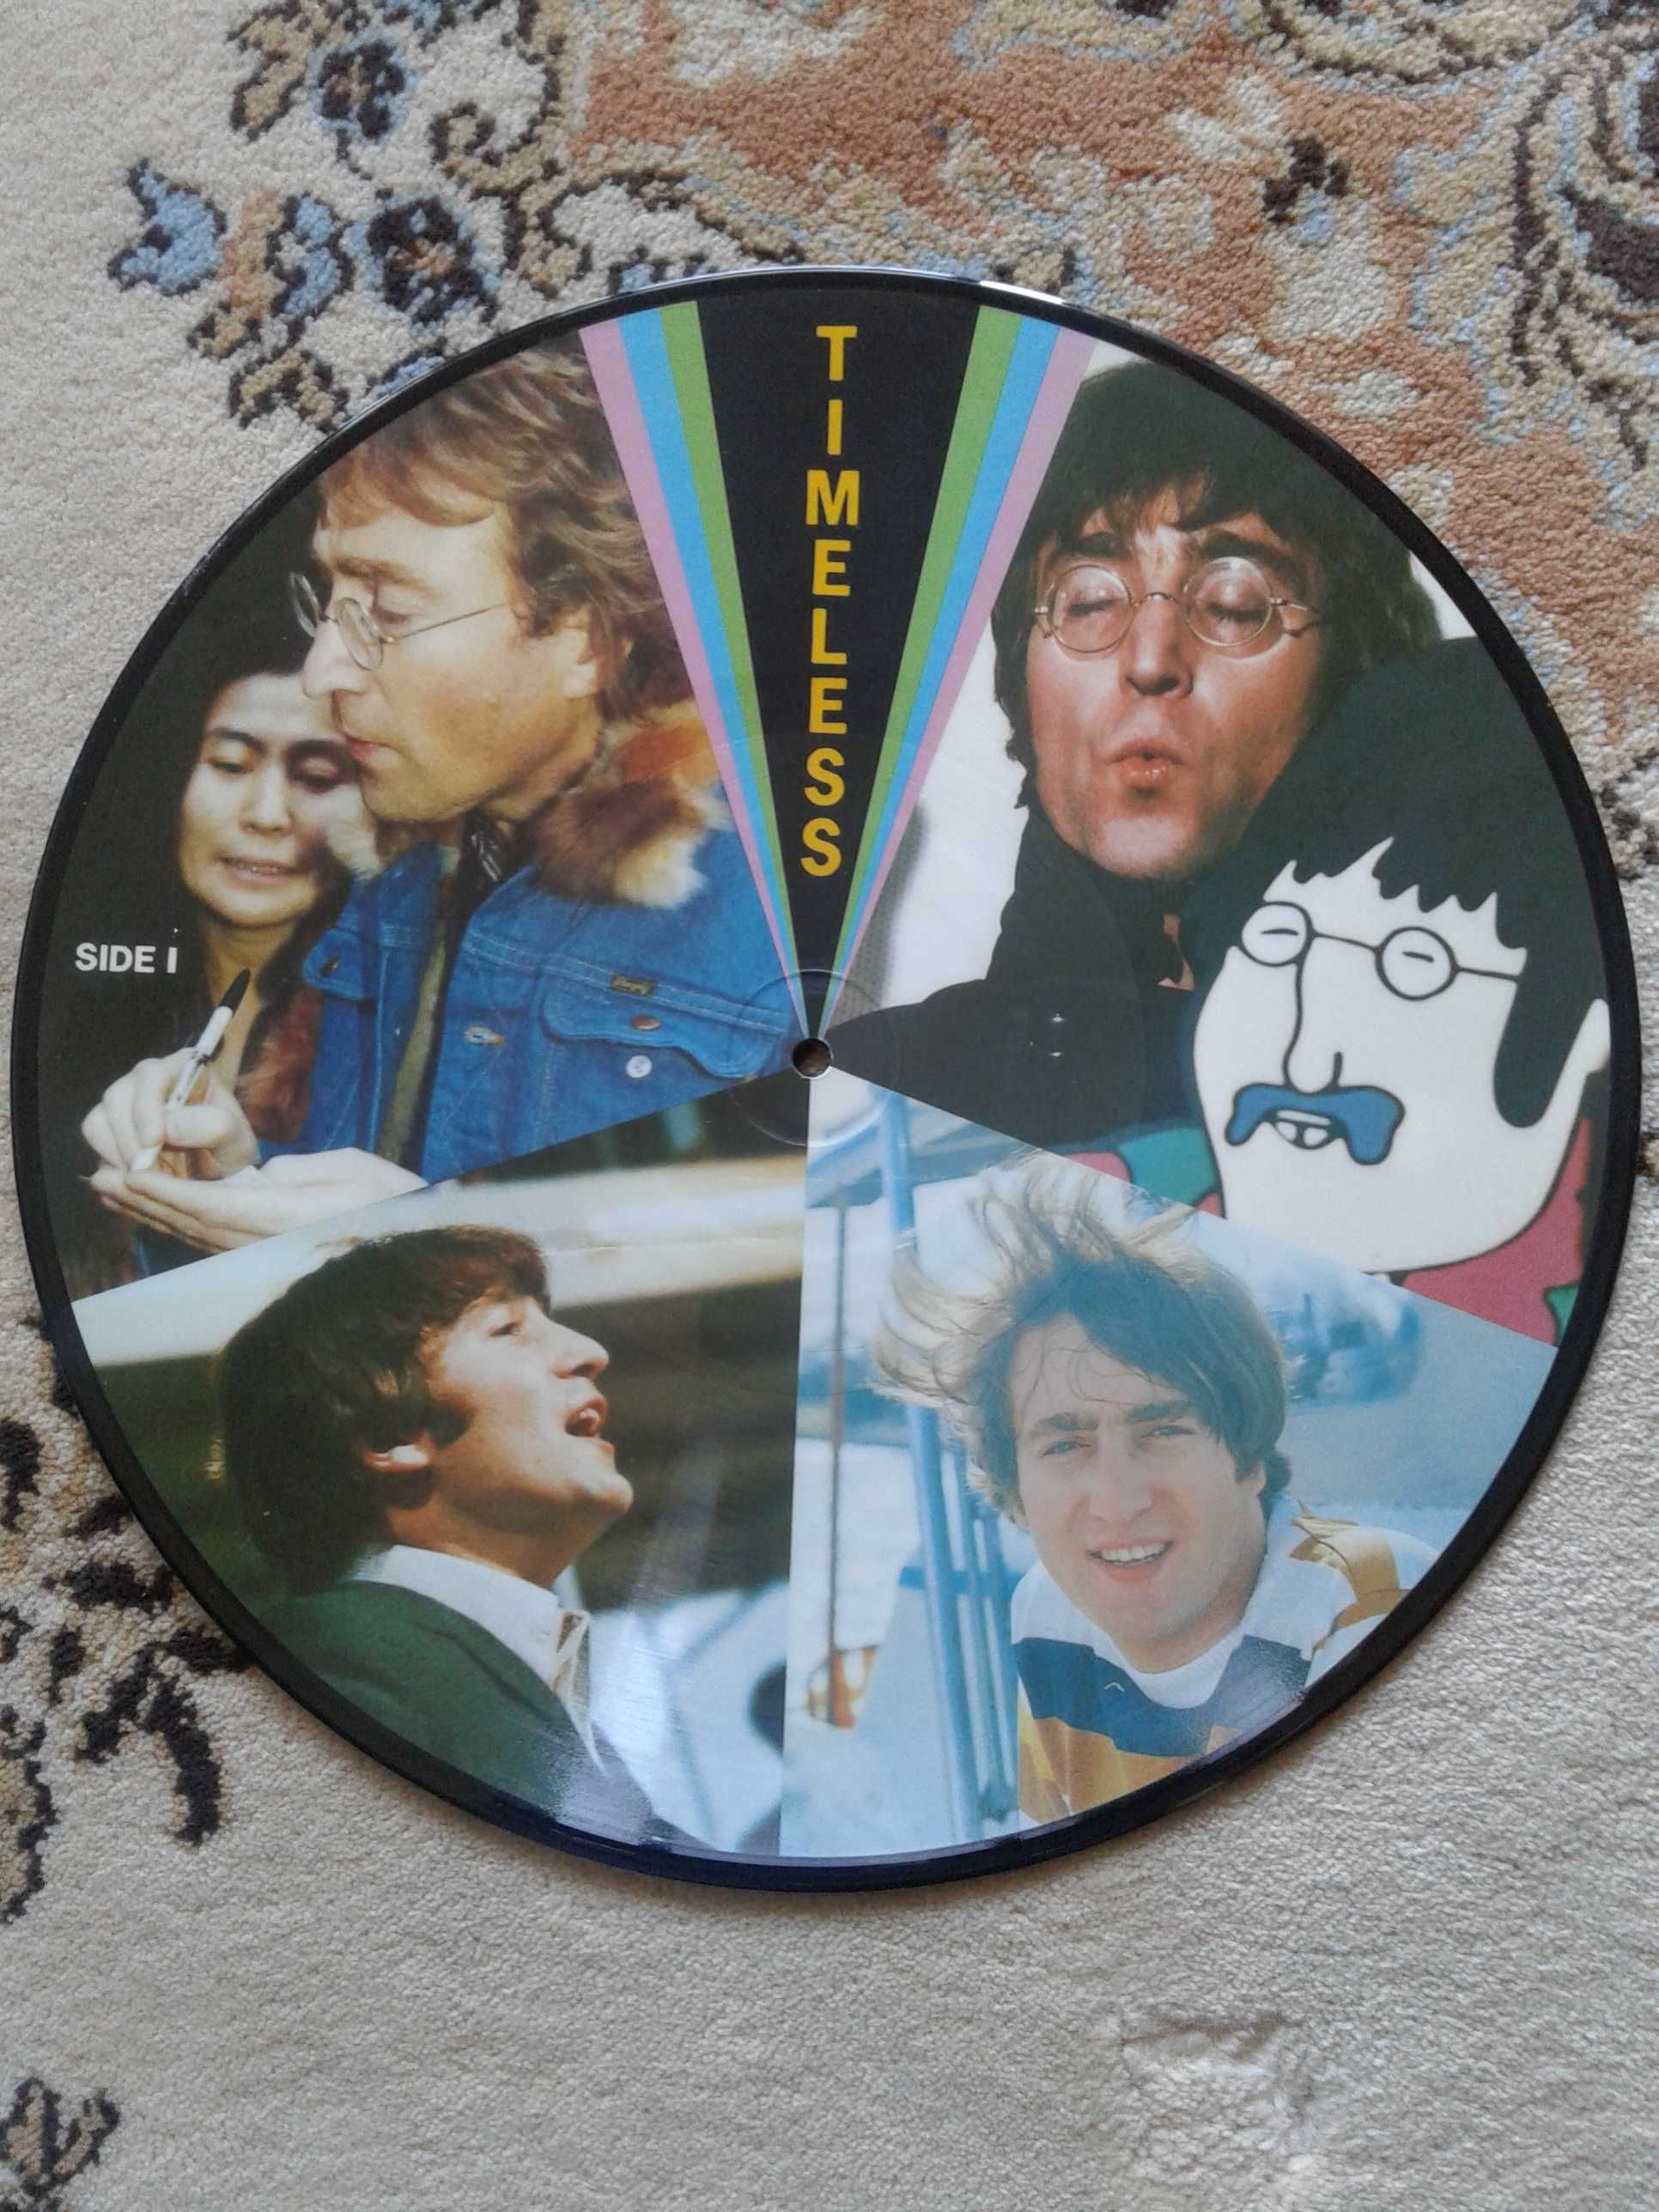 Discos dos Beatles - Picture Discs (Edicoes Limitadas)